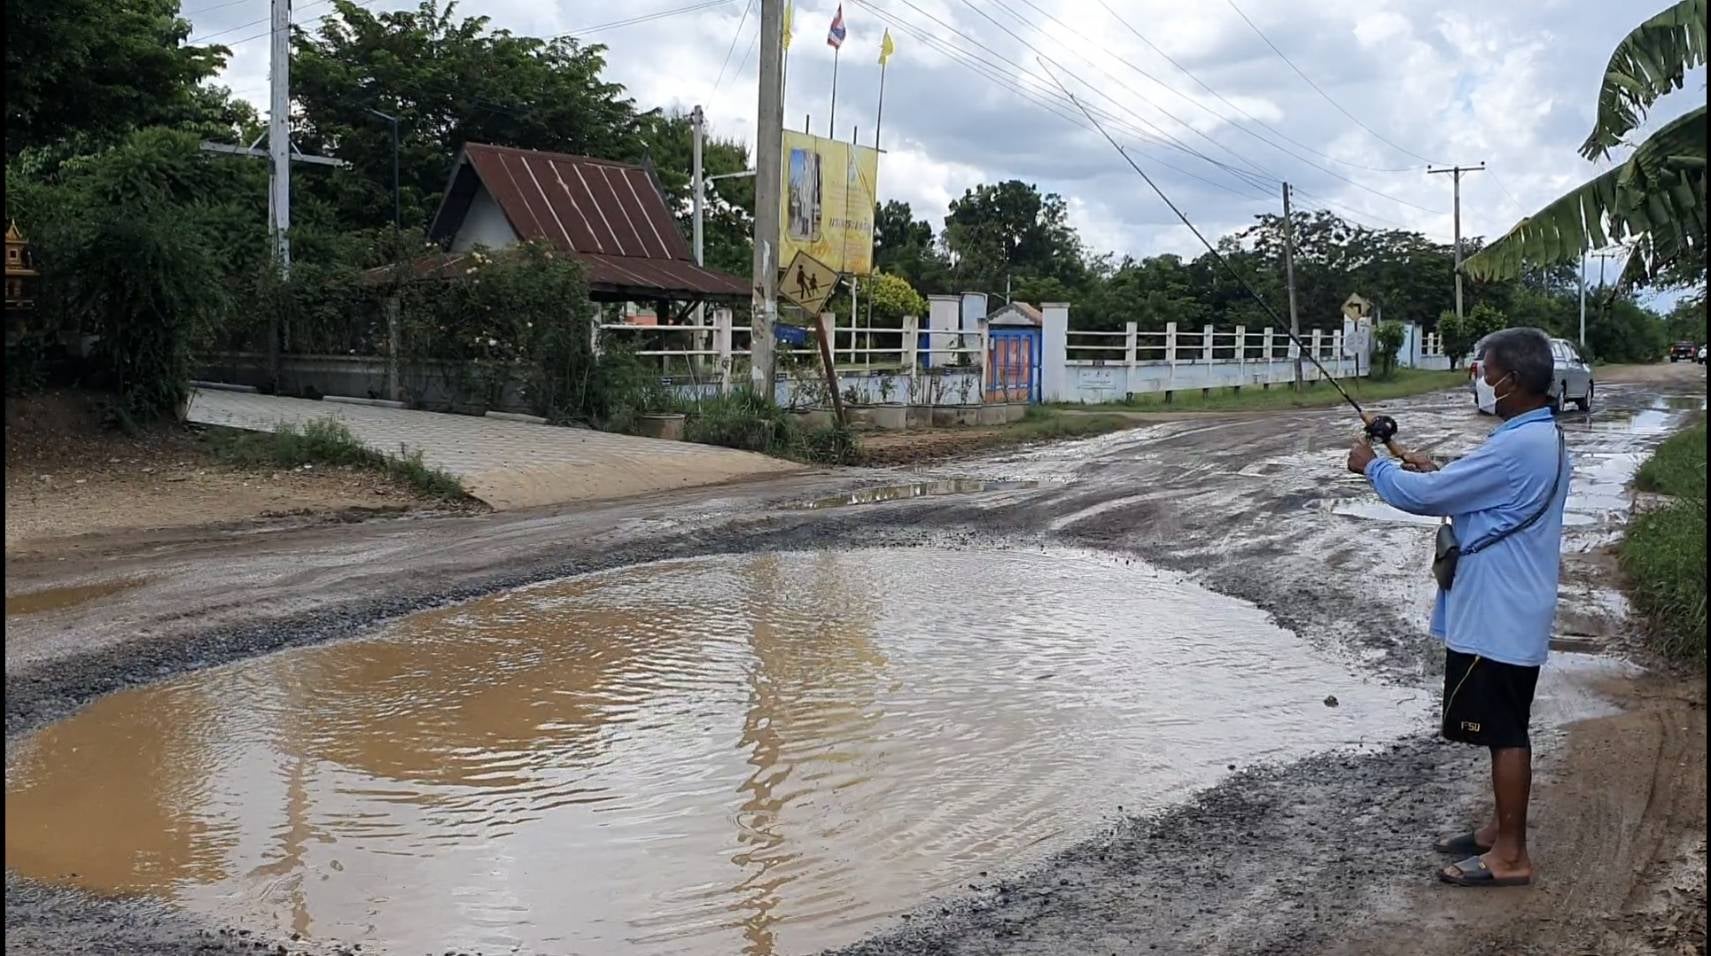 thai village potholes on road 2